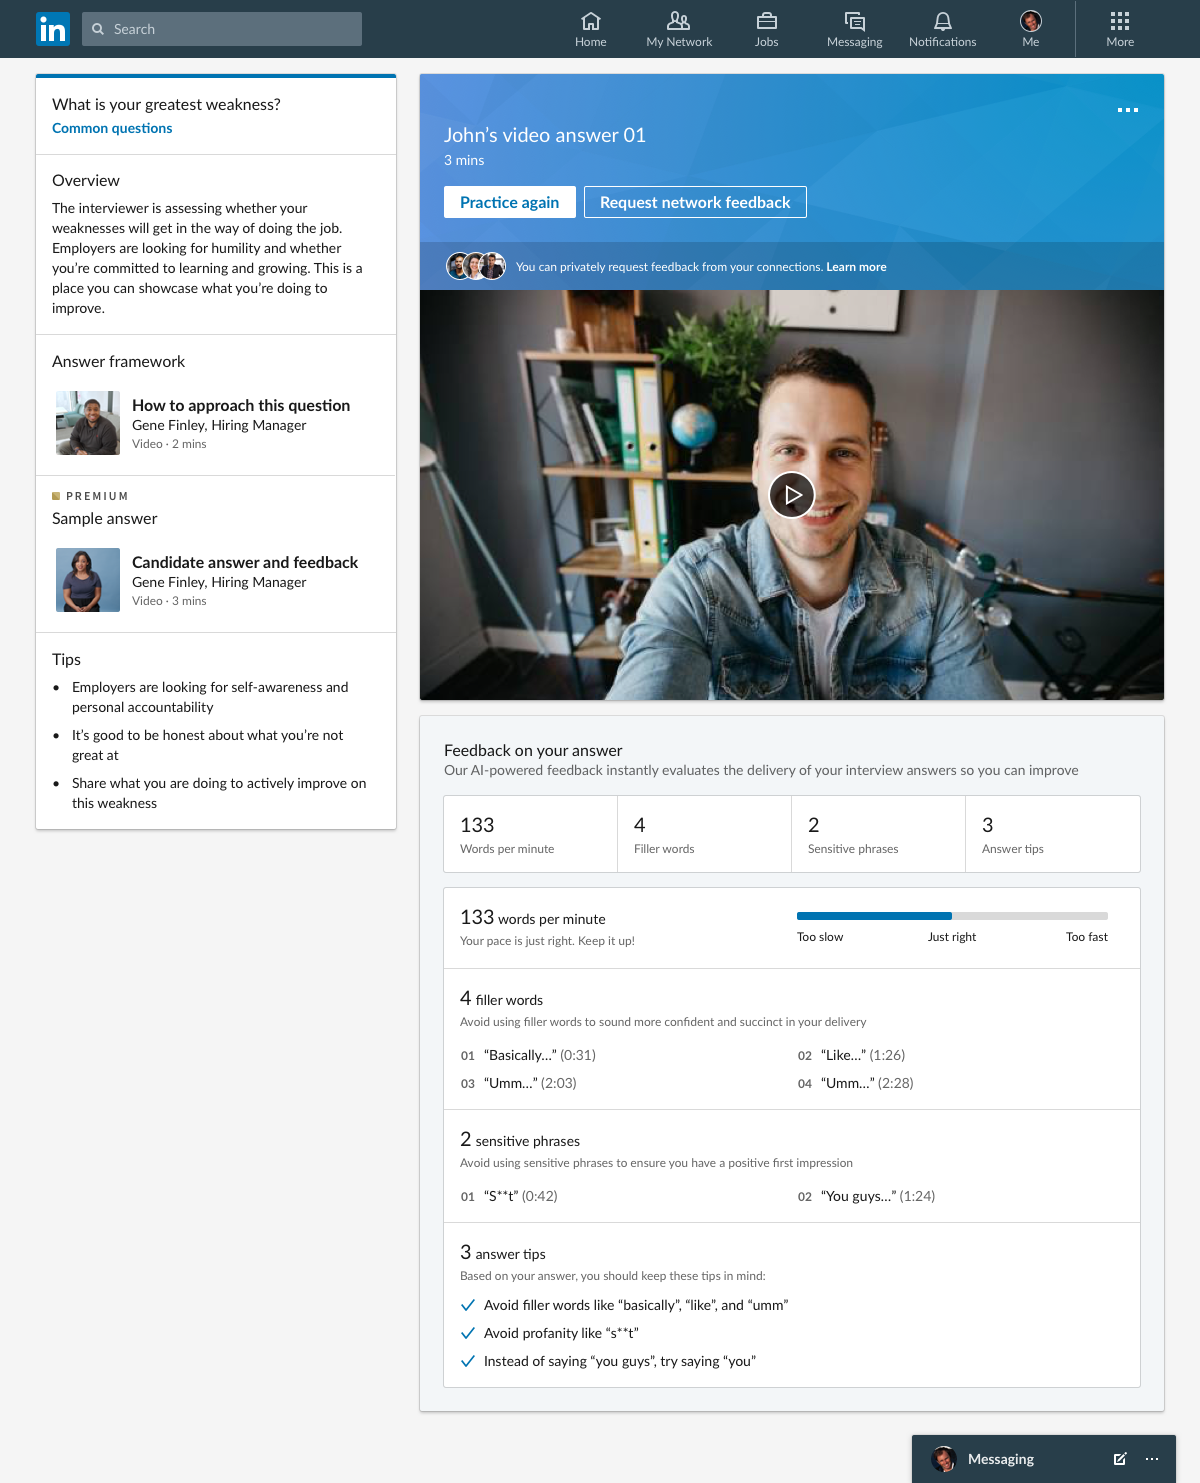 LinkedIn Virtual Interview Preparation Tool